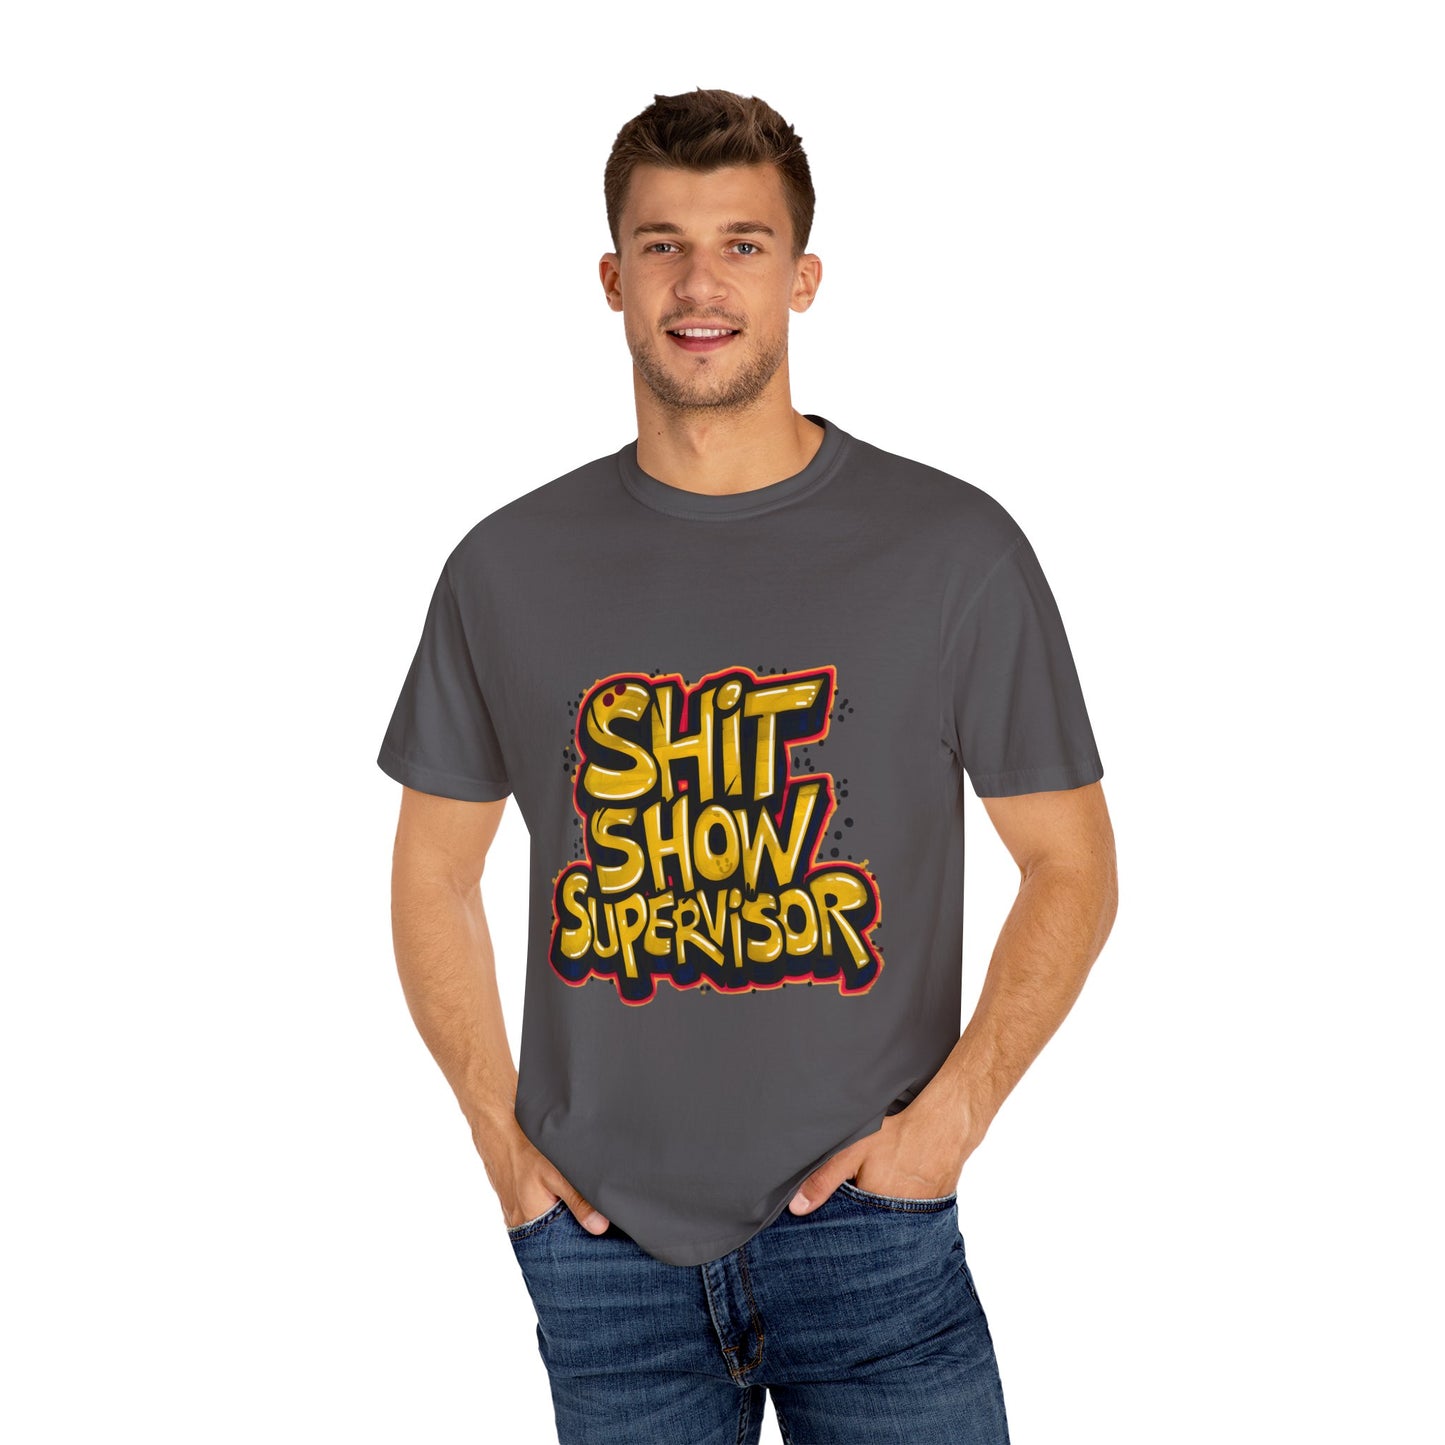 Shit Show Supervisor Urban Sarcastic Graphic Unisex Garment Dyed T-shirt Cotton Funny Humorous Graphic Soft Premium Unisex Men Women Graphite T-shirt Birthday Gift-39